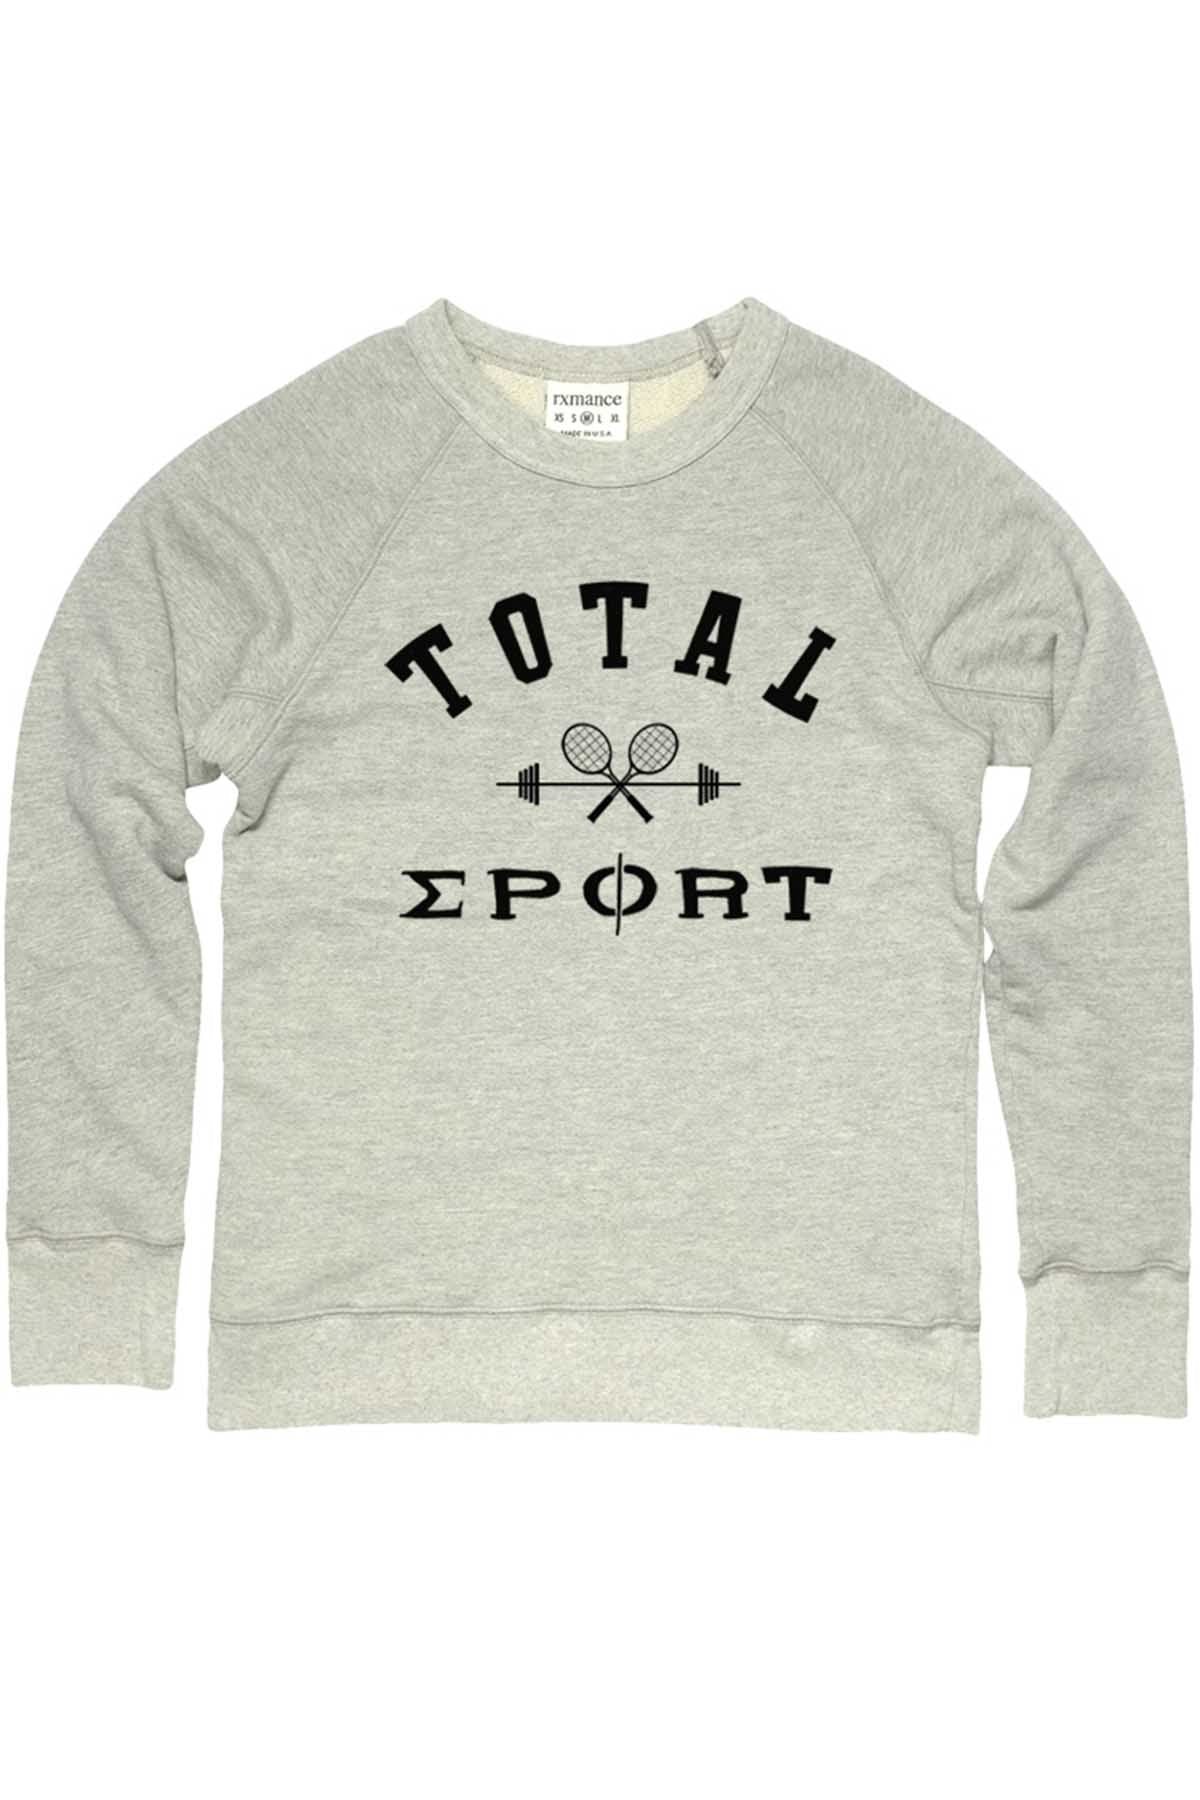 Rxmance Unisex Oatmeal Total Sport Crew Sweatshirt